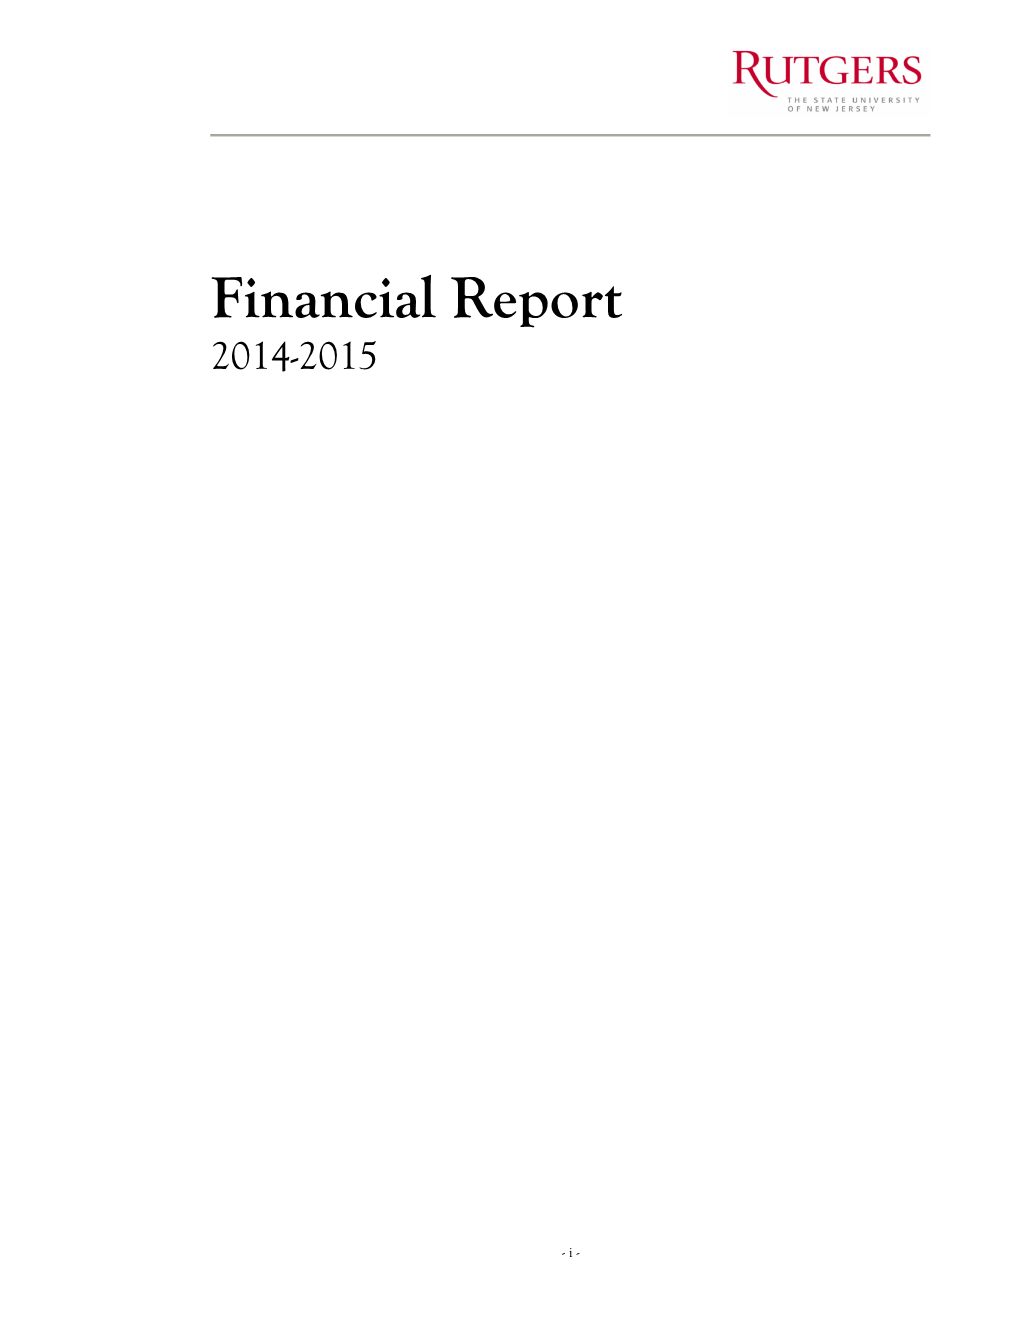 Financial Report 2014-2015